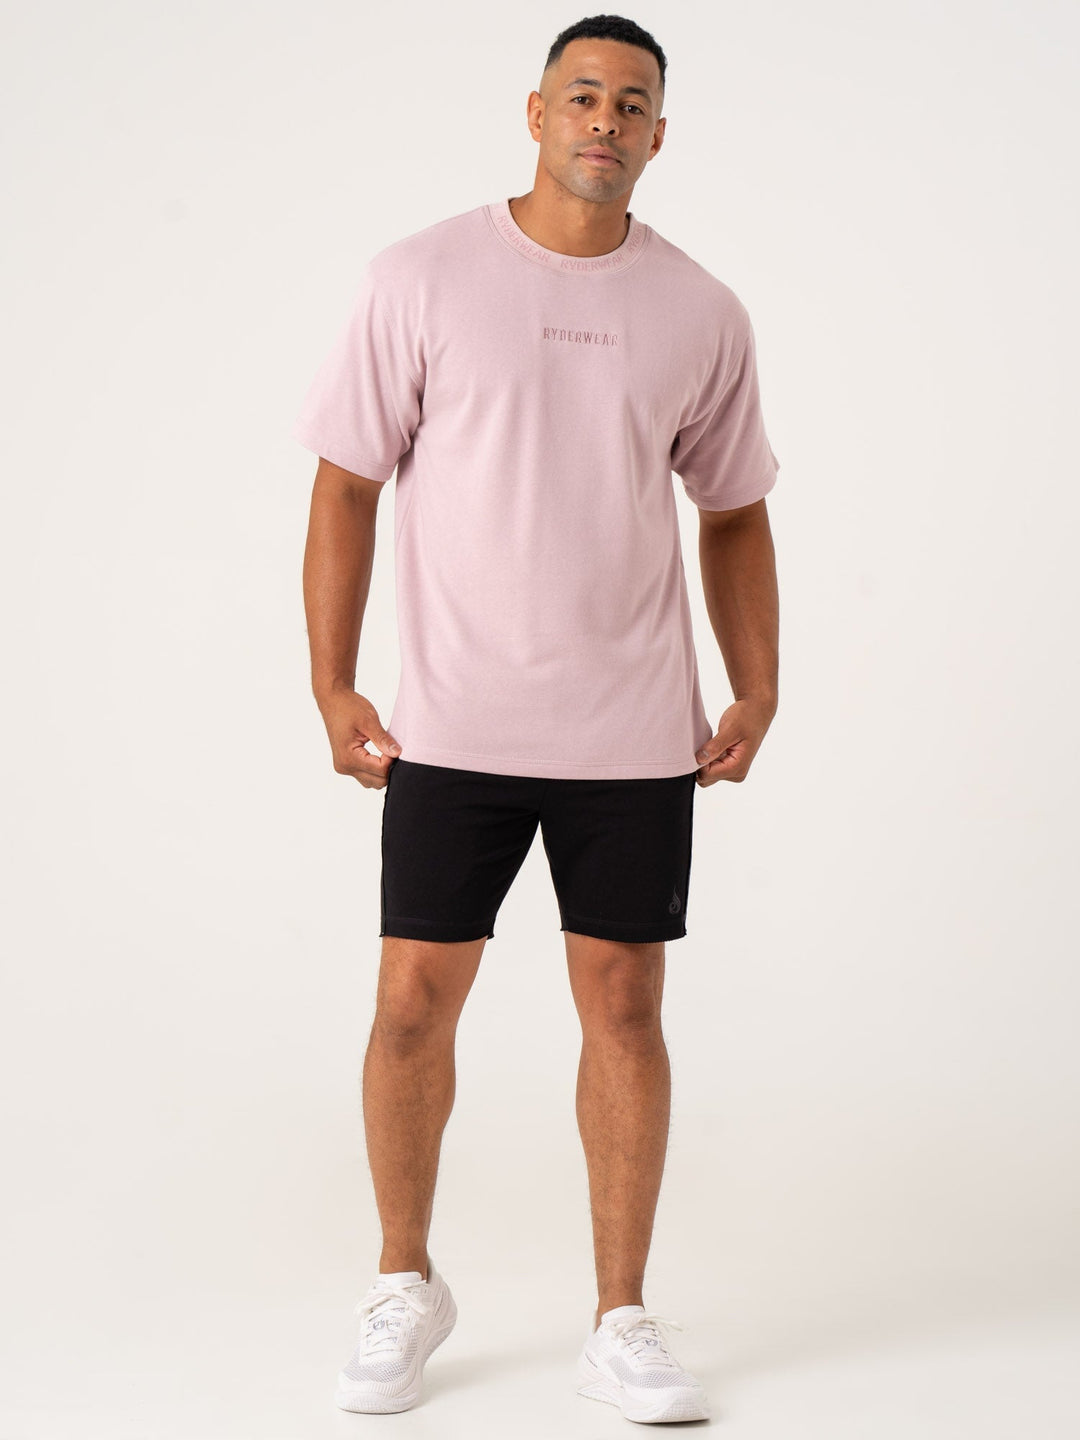 Pursuit Fleece T-Shirt - Cinder Clothing Ryderwear 